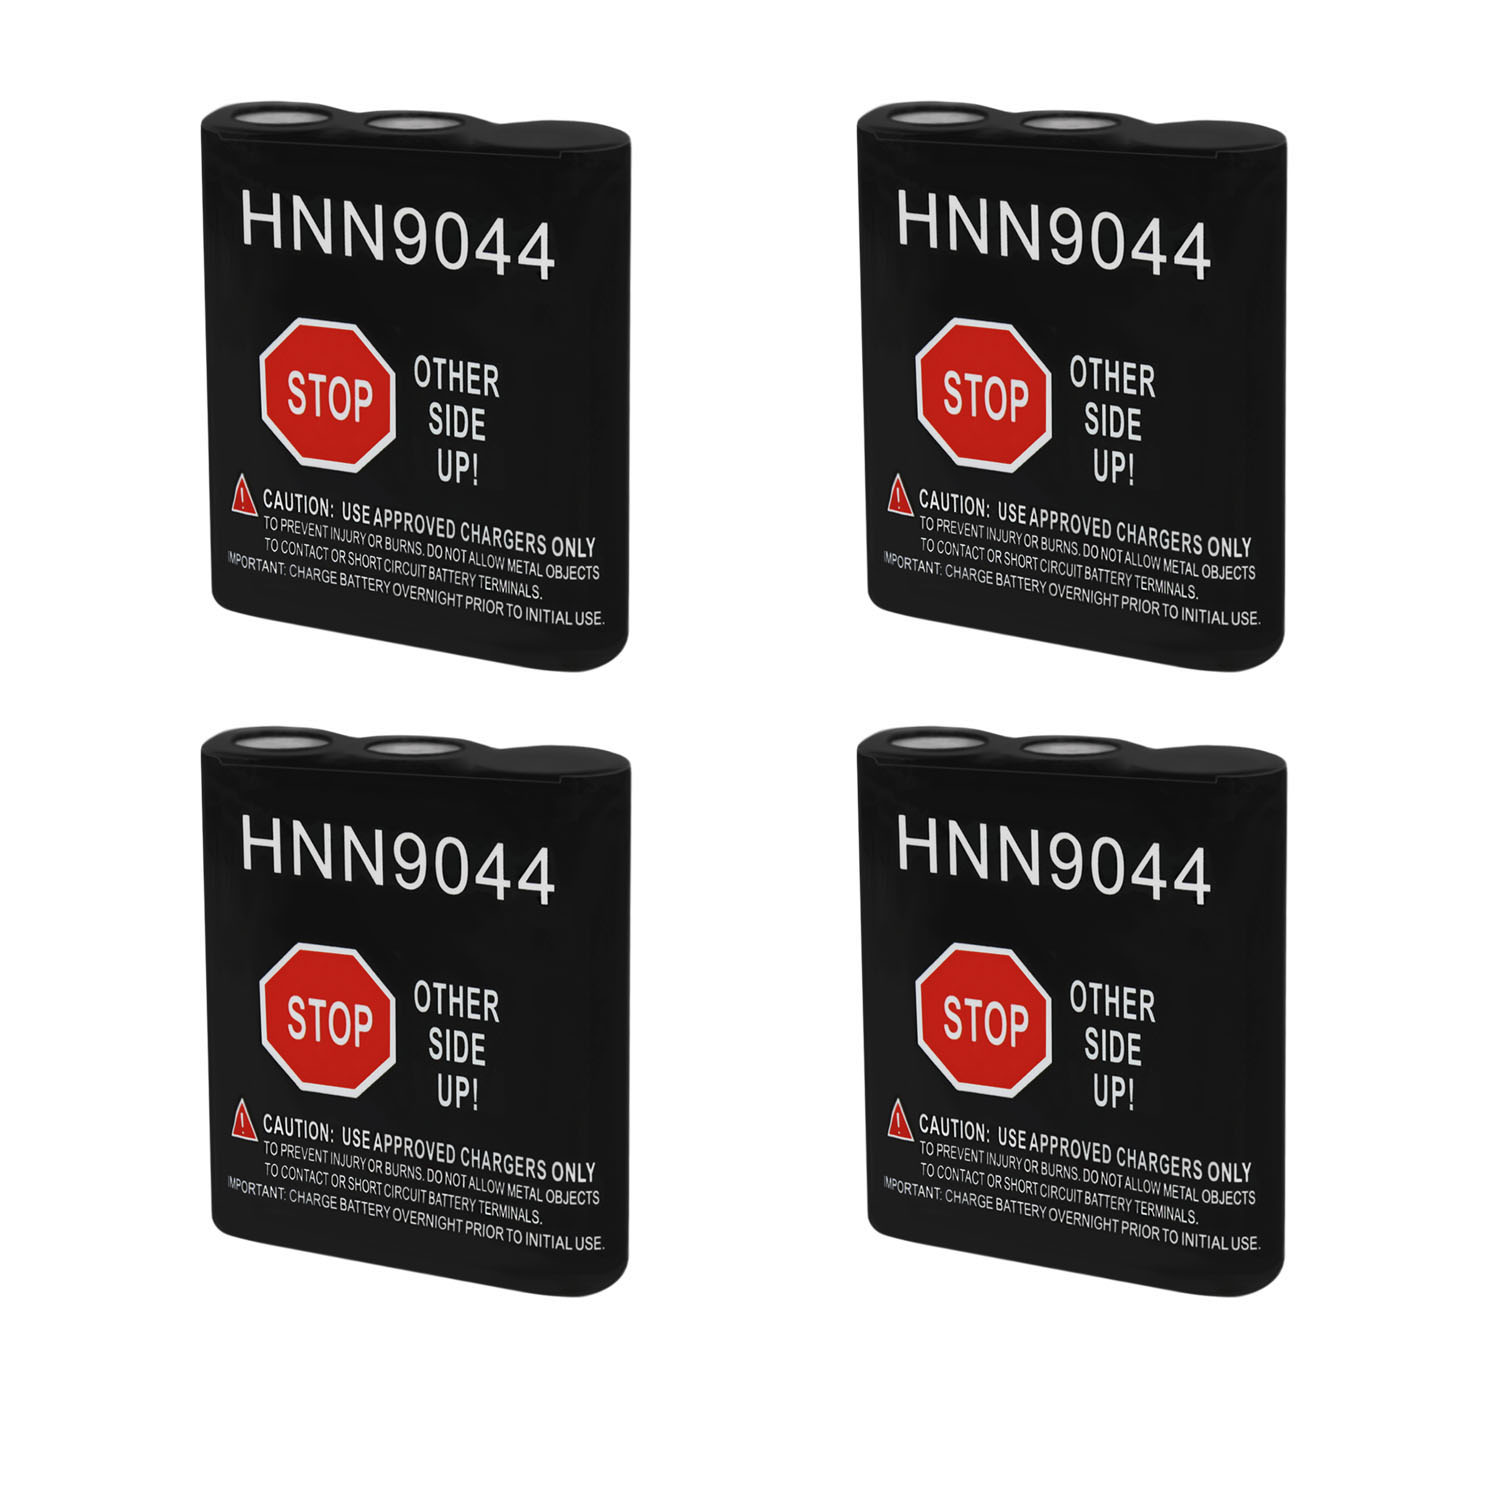 HNN9044 Battery for Motorola SPIRIT 2-Way Radio - 4 Pack